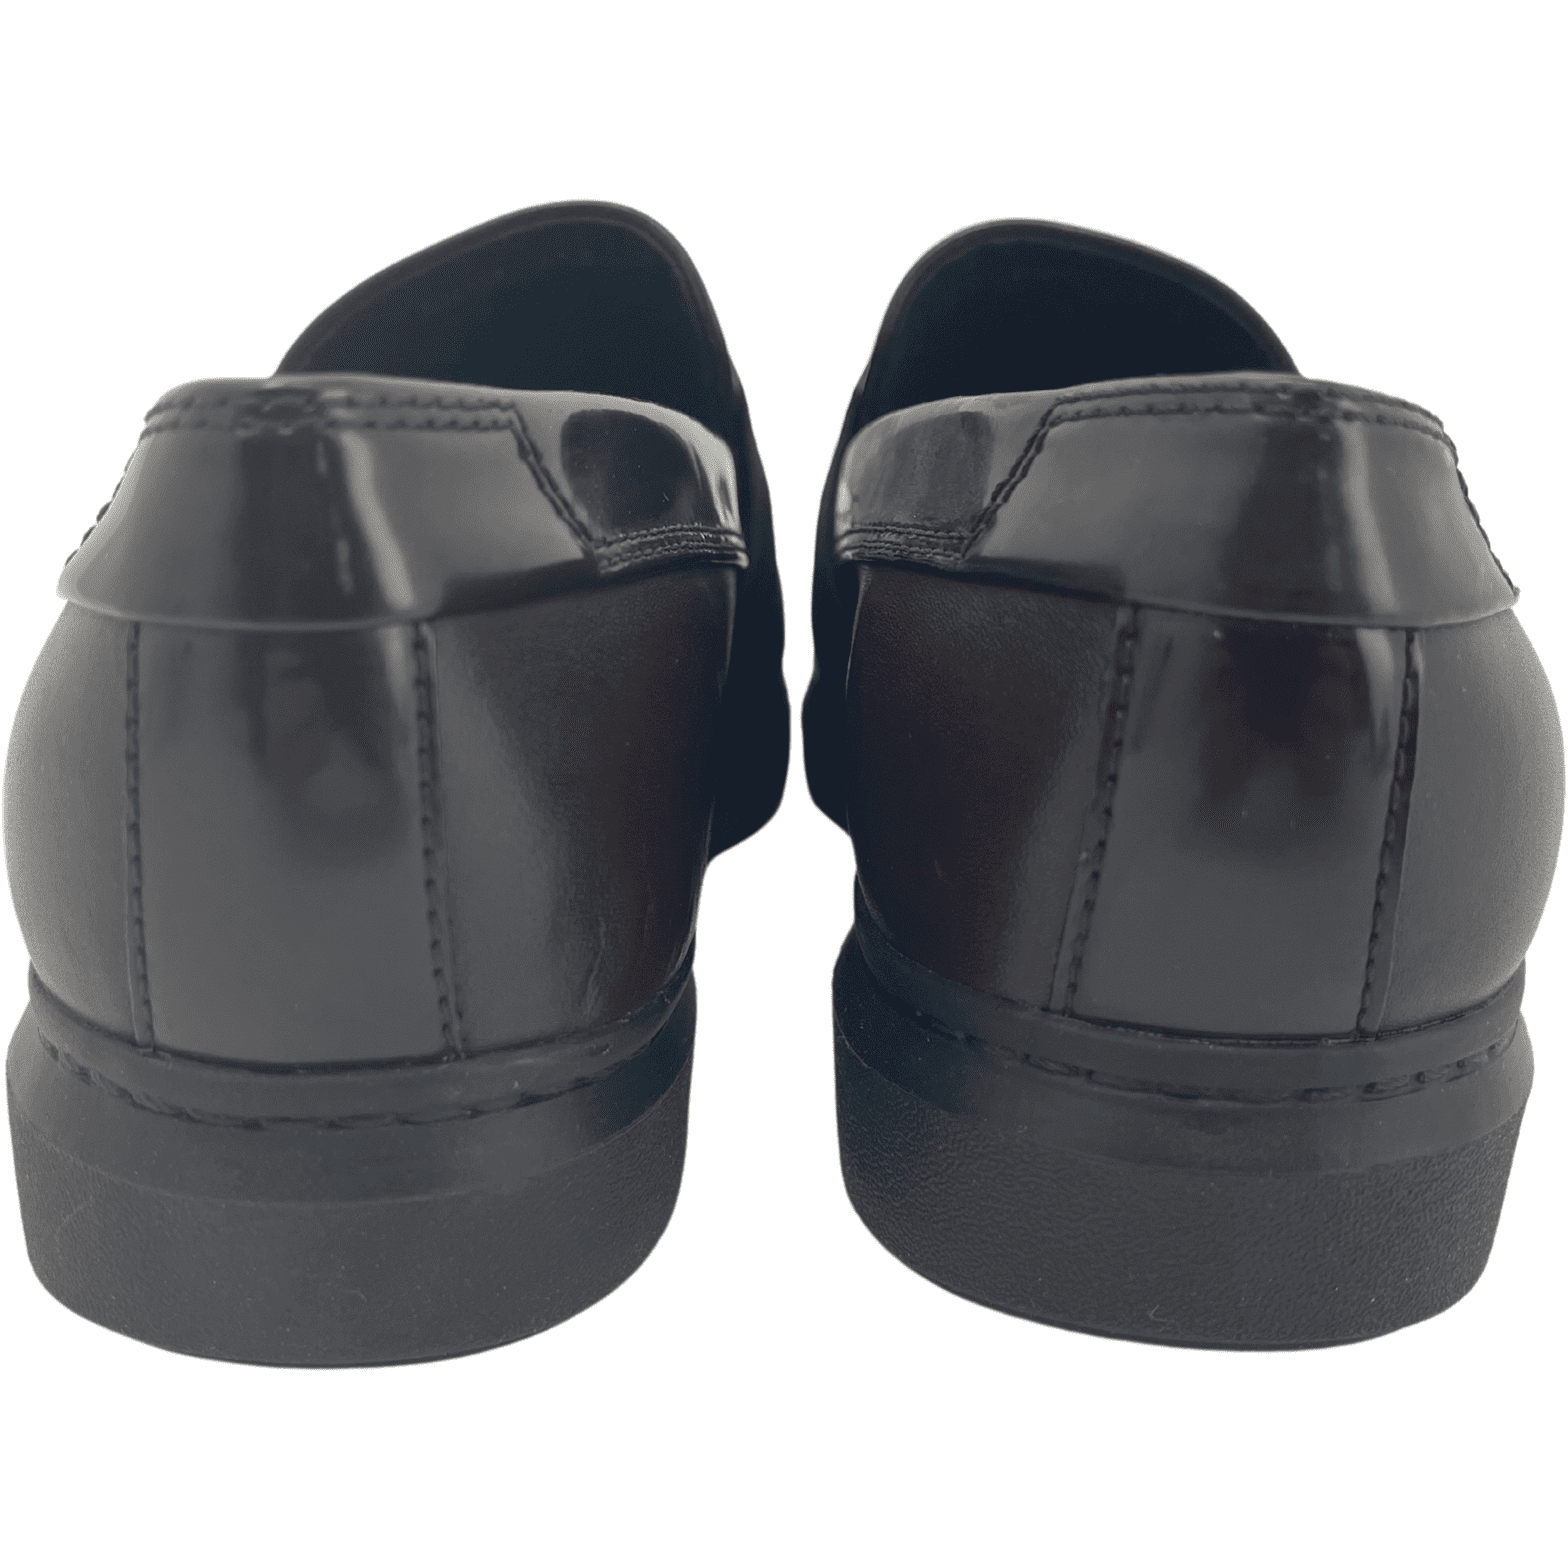 Geox Women's Loafer / D Jerrica B / Dark Burgundy & Black / Leather Shoe / Size 7.5 **No Tags**